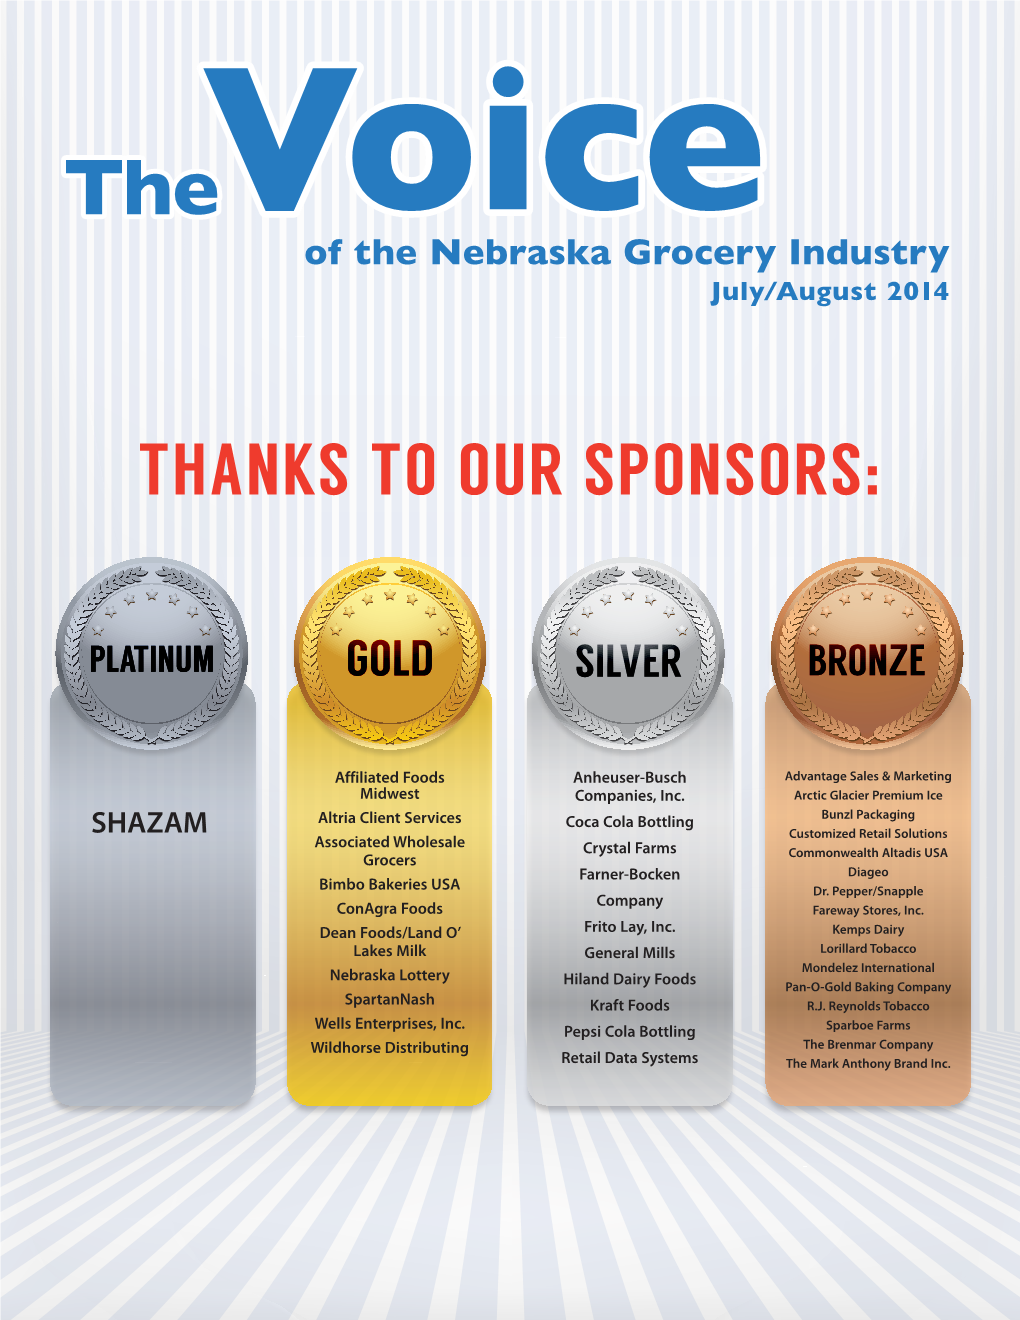 Thanks to Our Sponsors: Platinum Platinumsilverplatinumsilverplatinumgoldsilvergoldsilverbronzegoldbronzegoldbronze Bronze